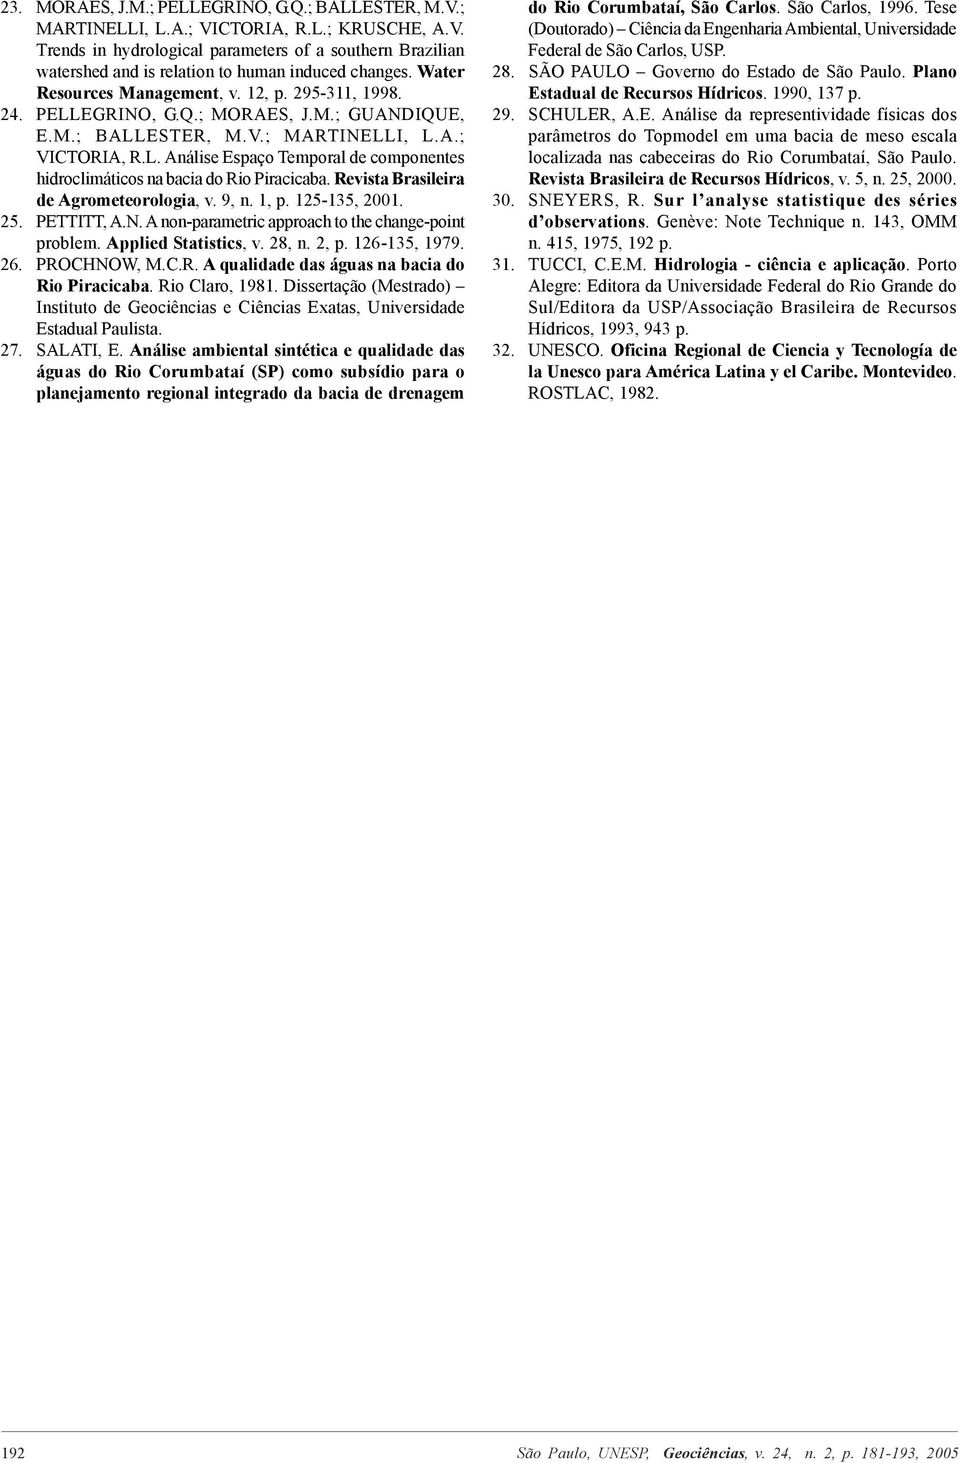 Revista Brasileira de Agrometeorologia, v. 9, n. 1, p. 125-135, 2001. 25. PETTITT, A.N. A non-parametric approach to the change-point problem. Applied Statistics, v. 28, n. 2, p. 126-135, 1979. 26.